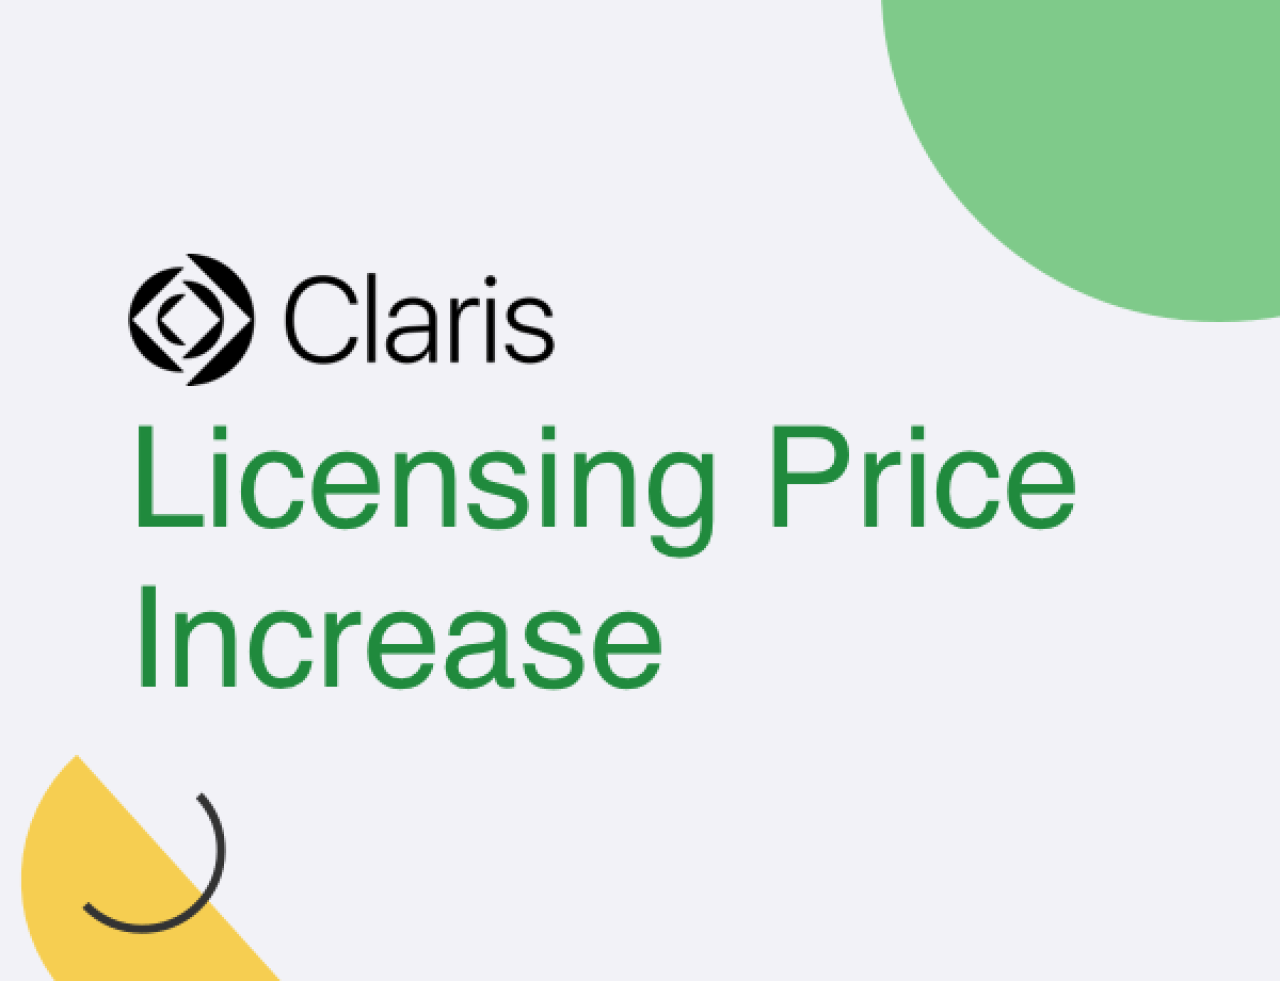 claris licensing price increase.